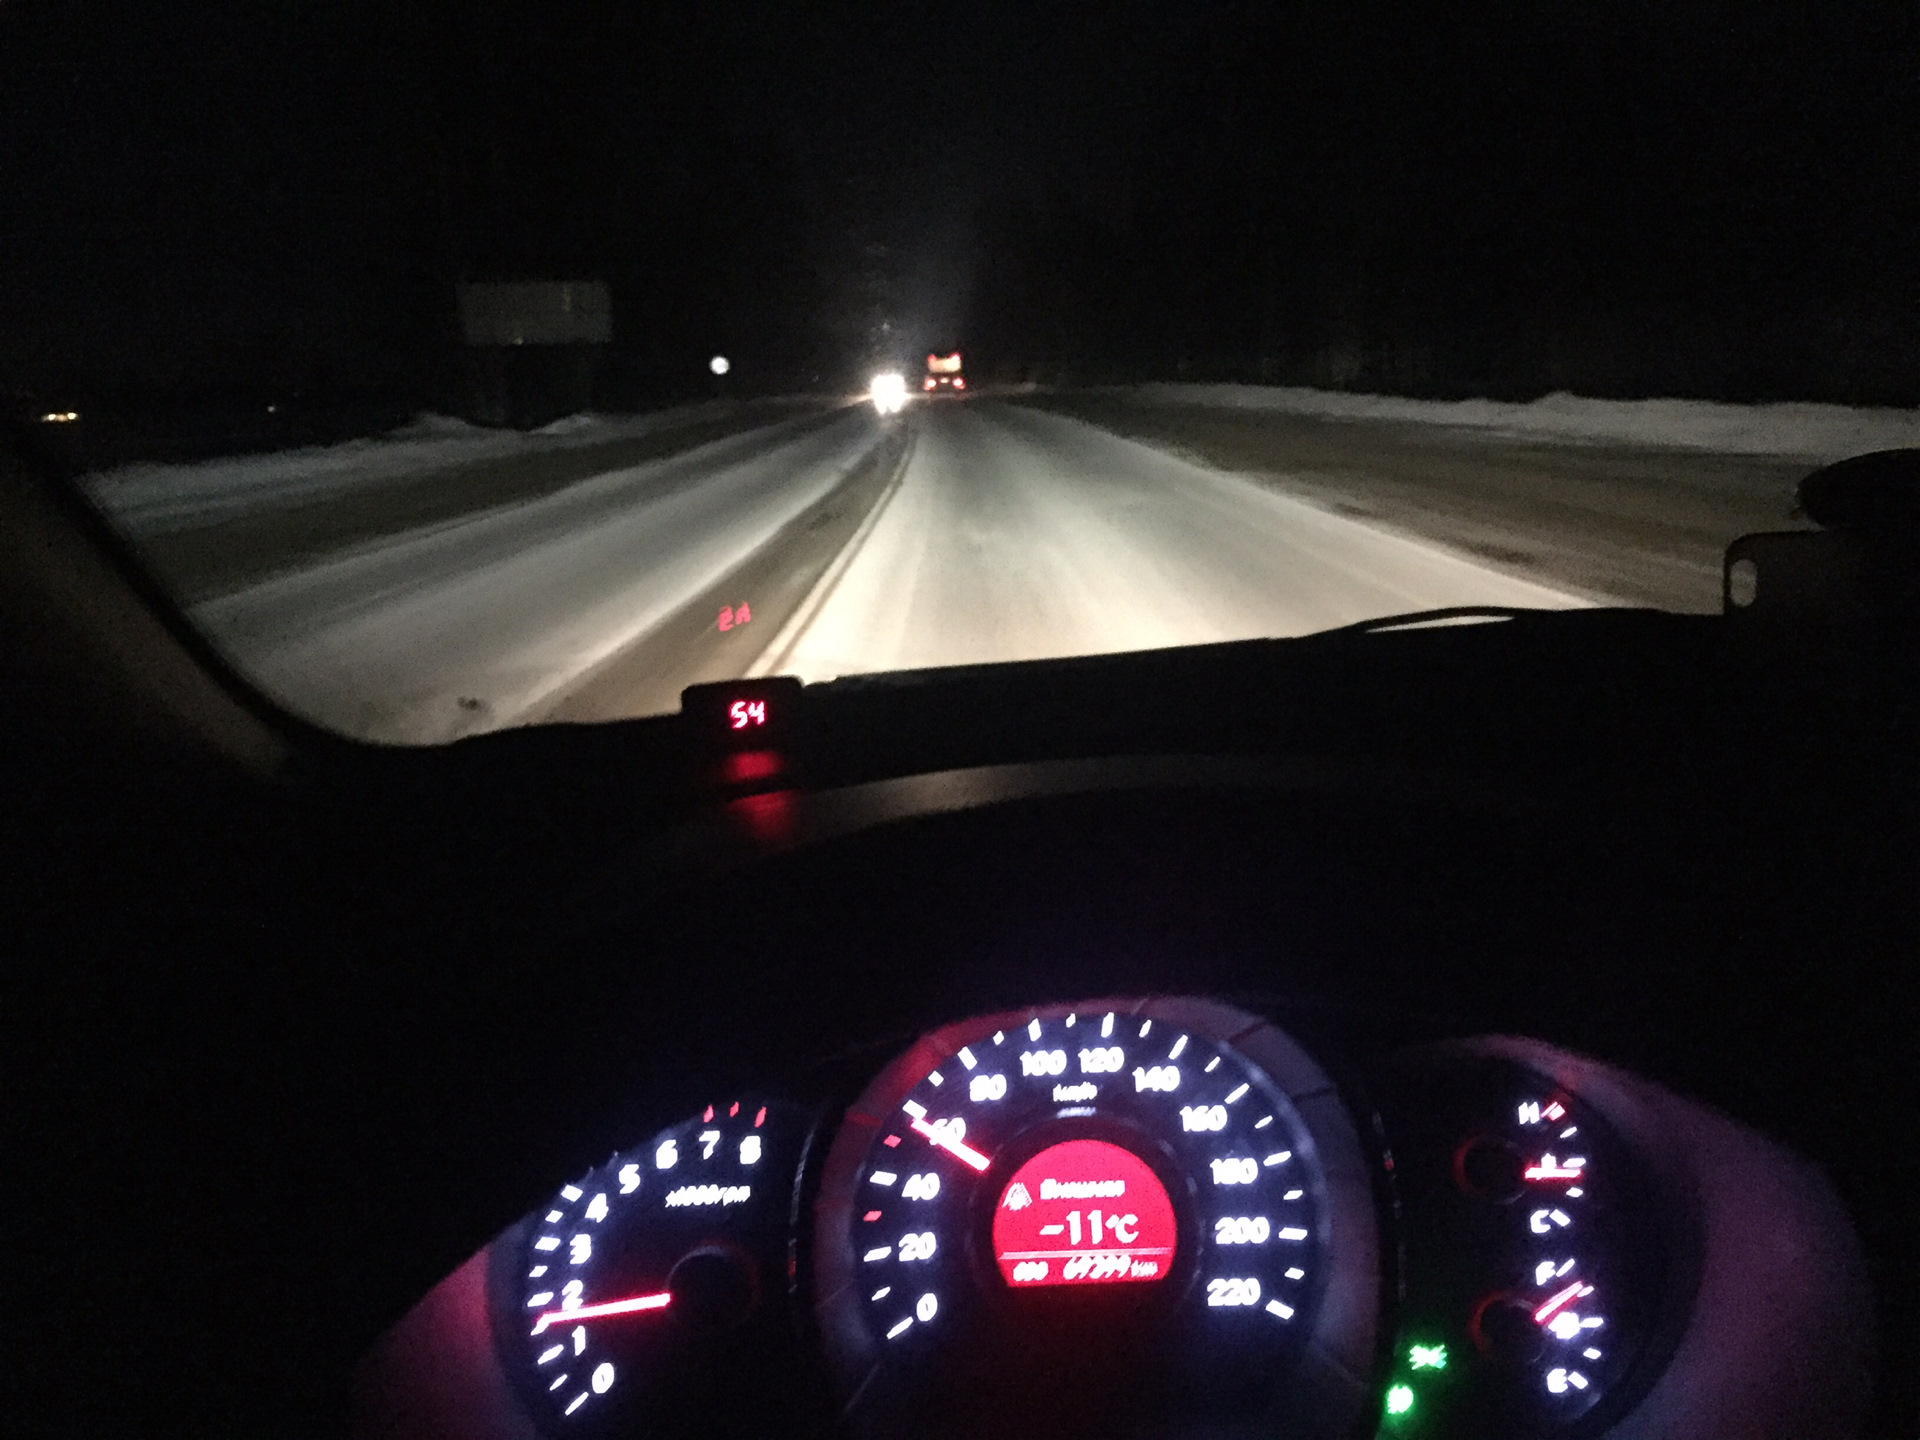 Toyota Camry 50 2016 за рулем ночь 180 км